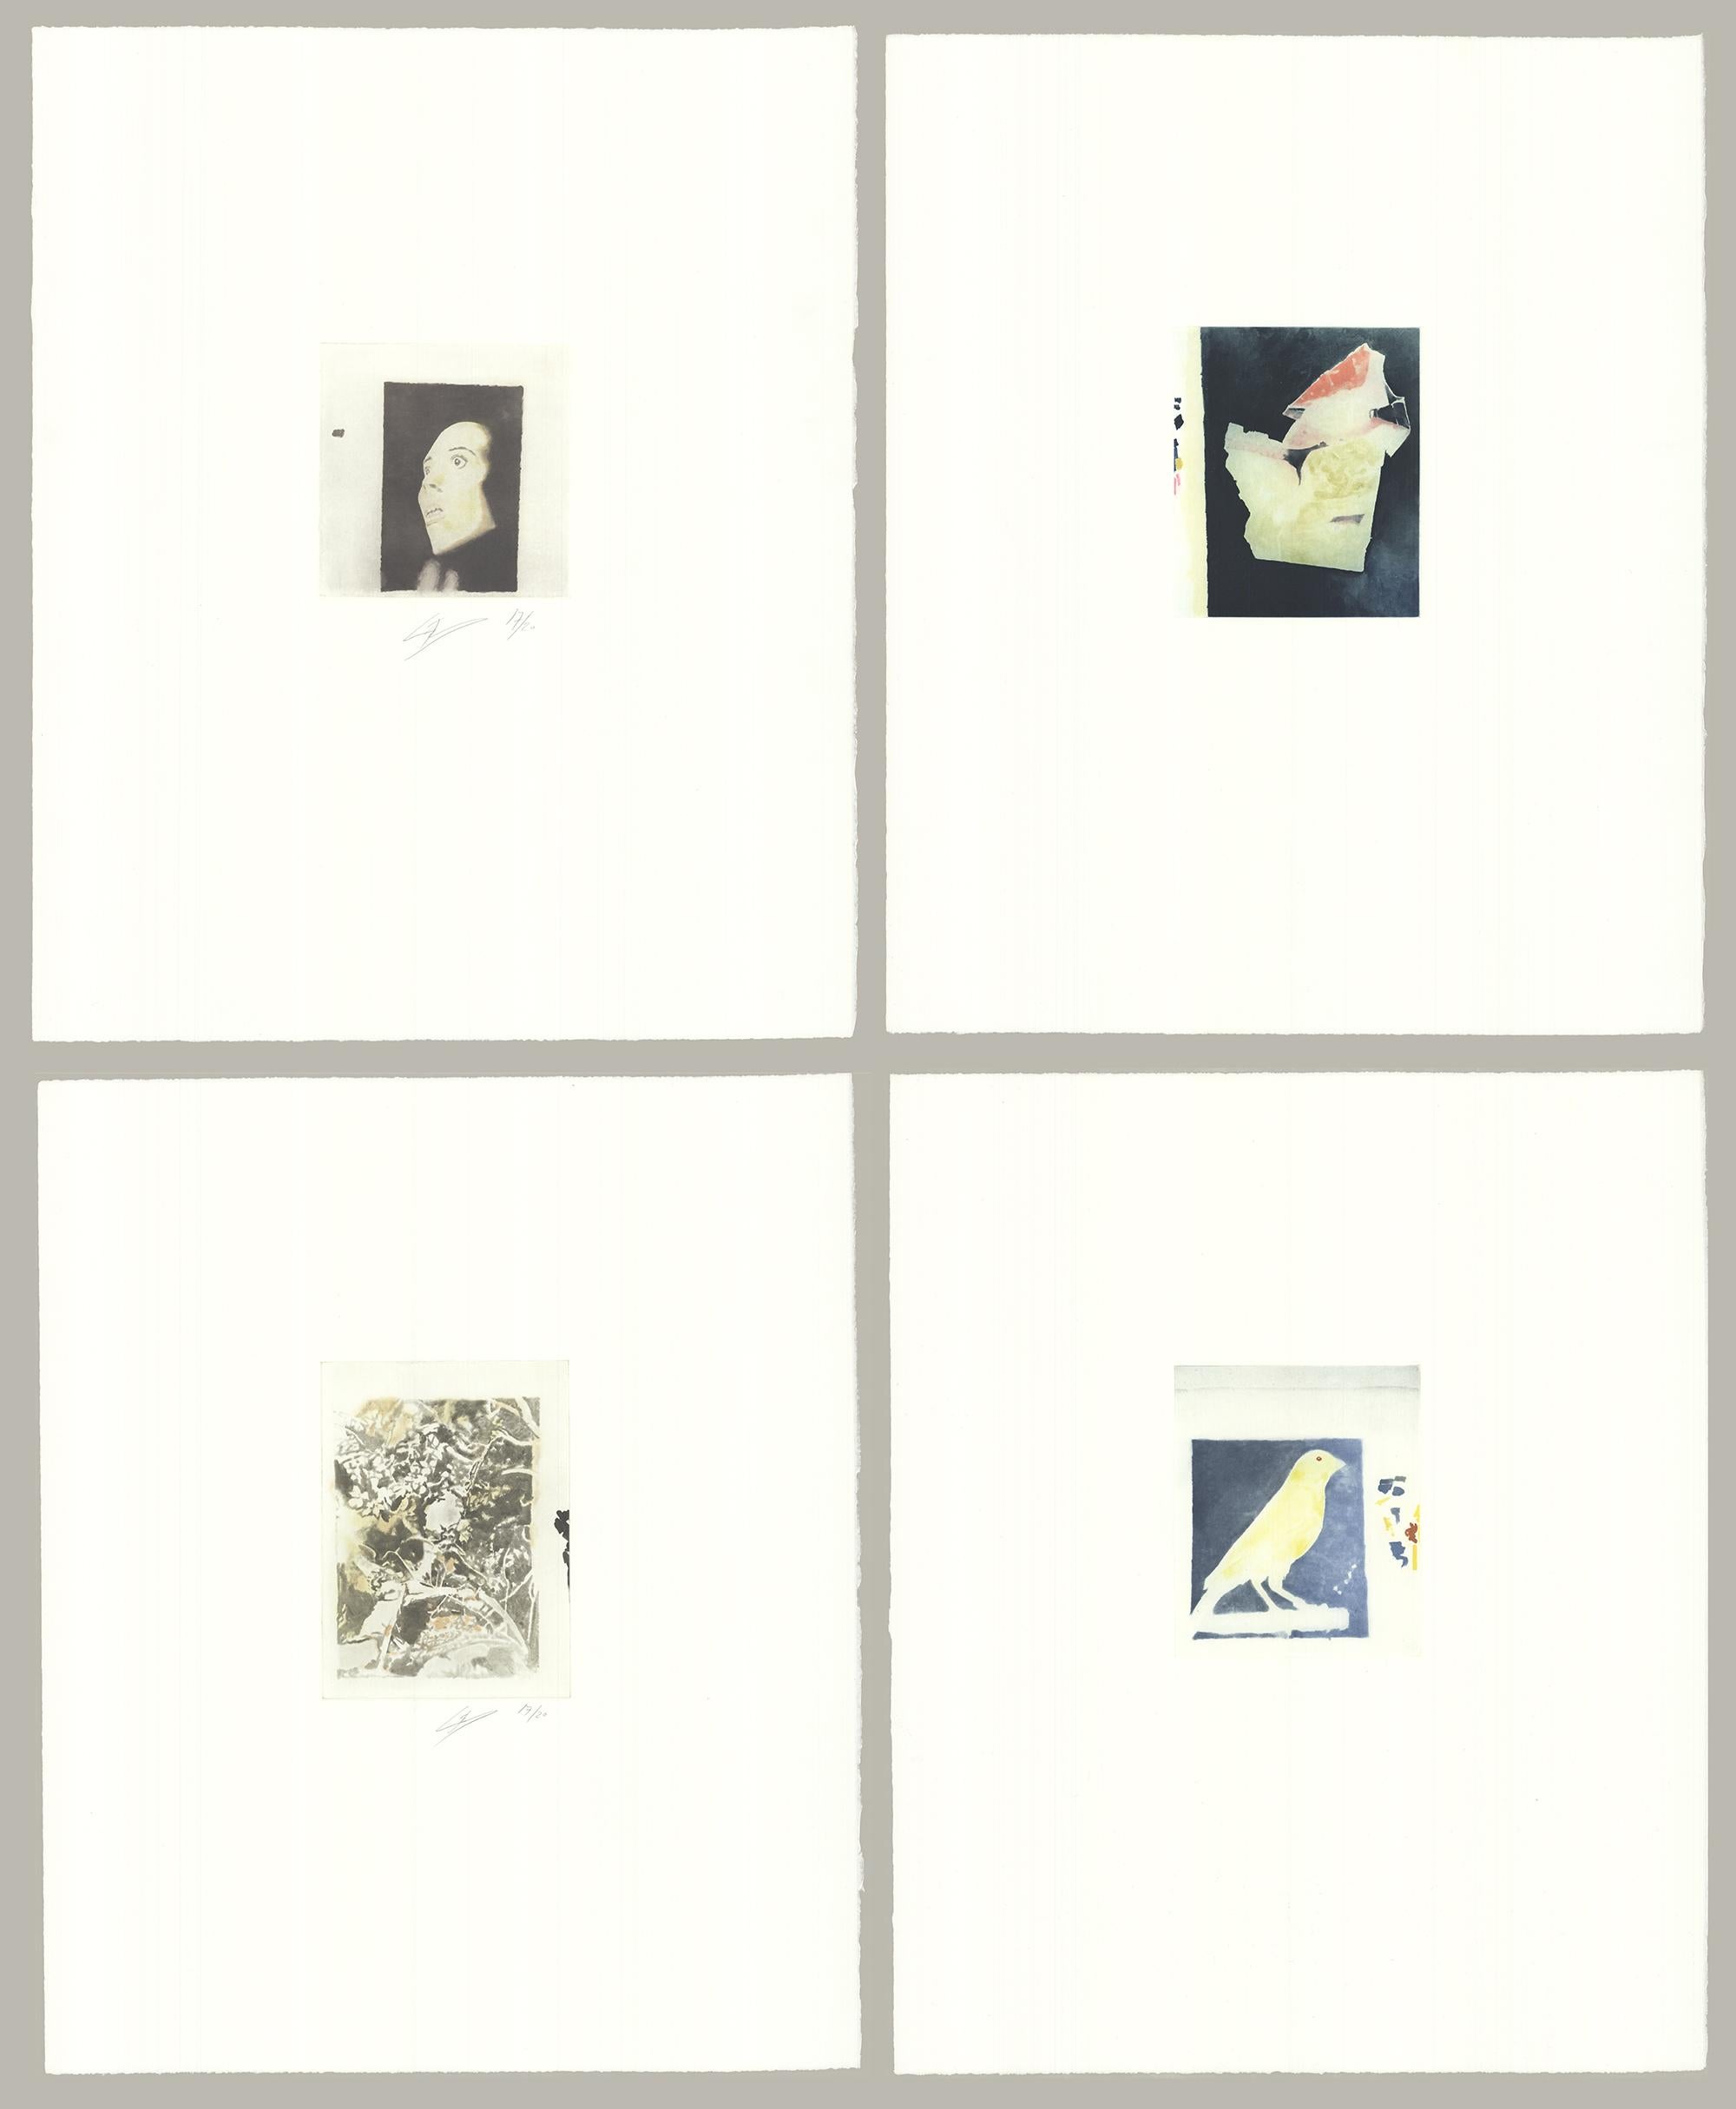 Isabel, Diorama, Scramble, Twenty Seventeen - Art by Luc Tuymans